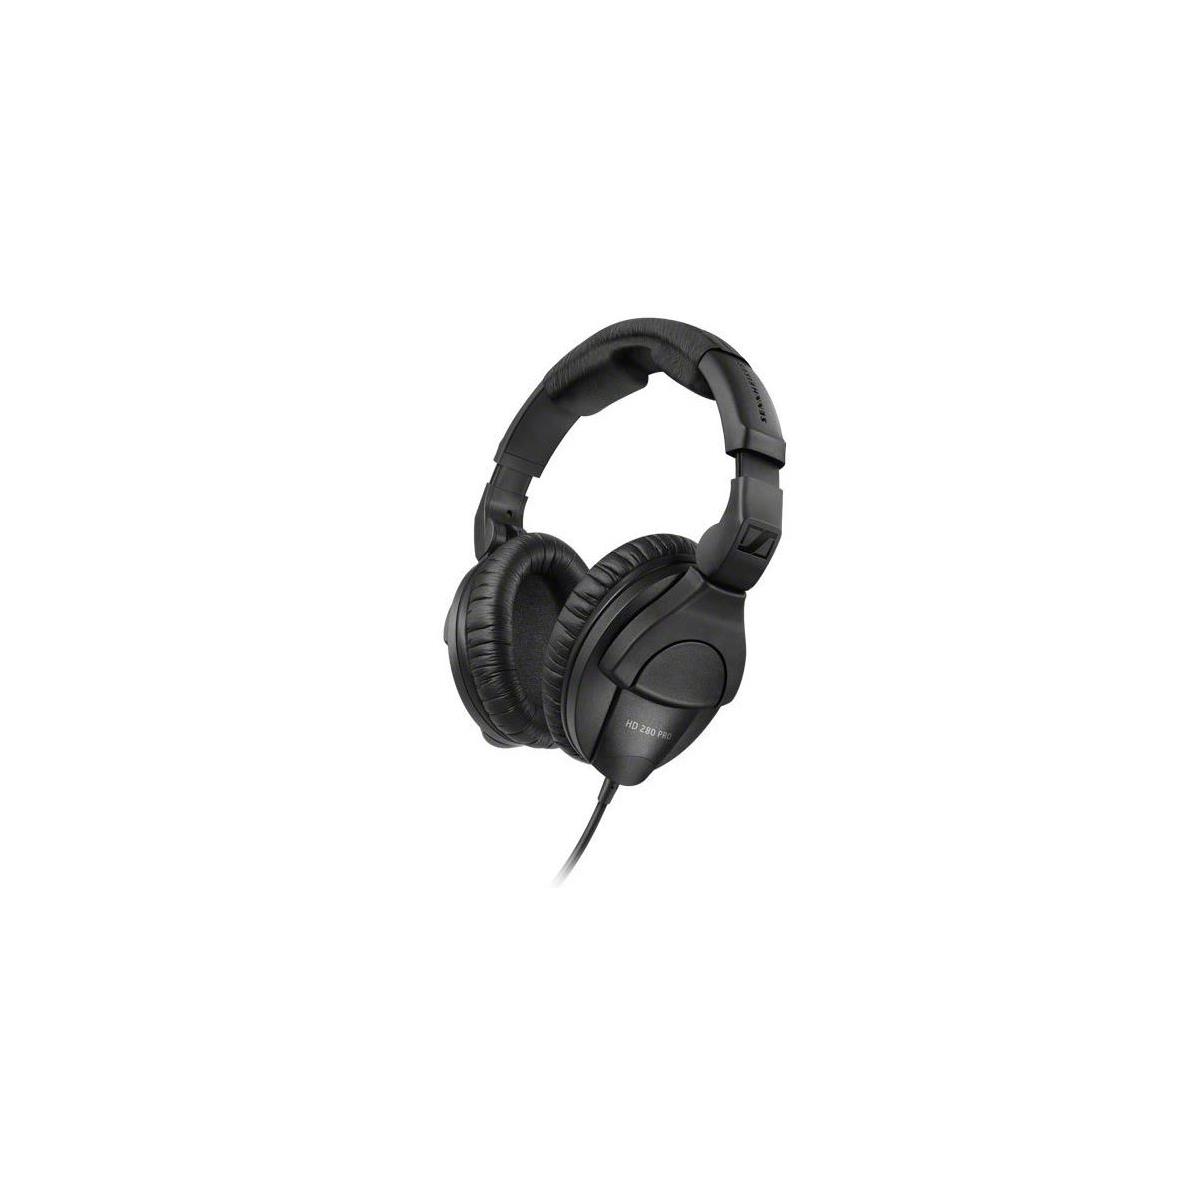 Sennheiser HD 280 Pro Circumaural  Closed-Back Monitor Headphones